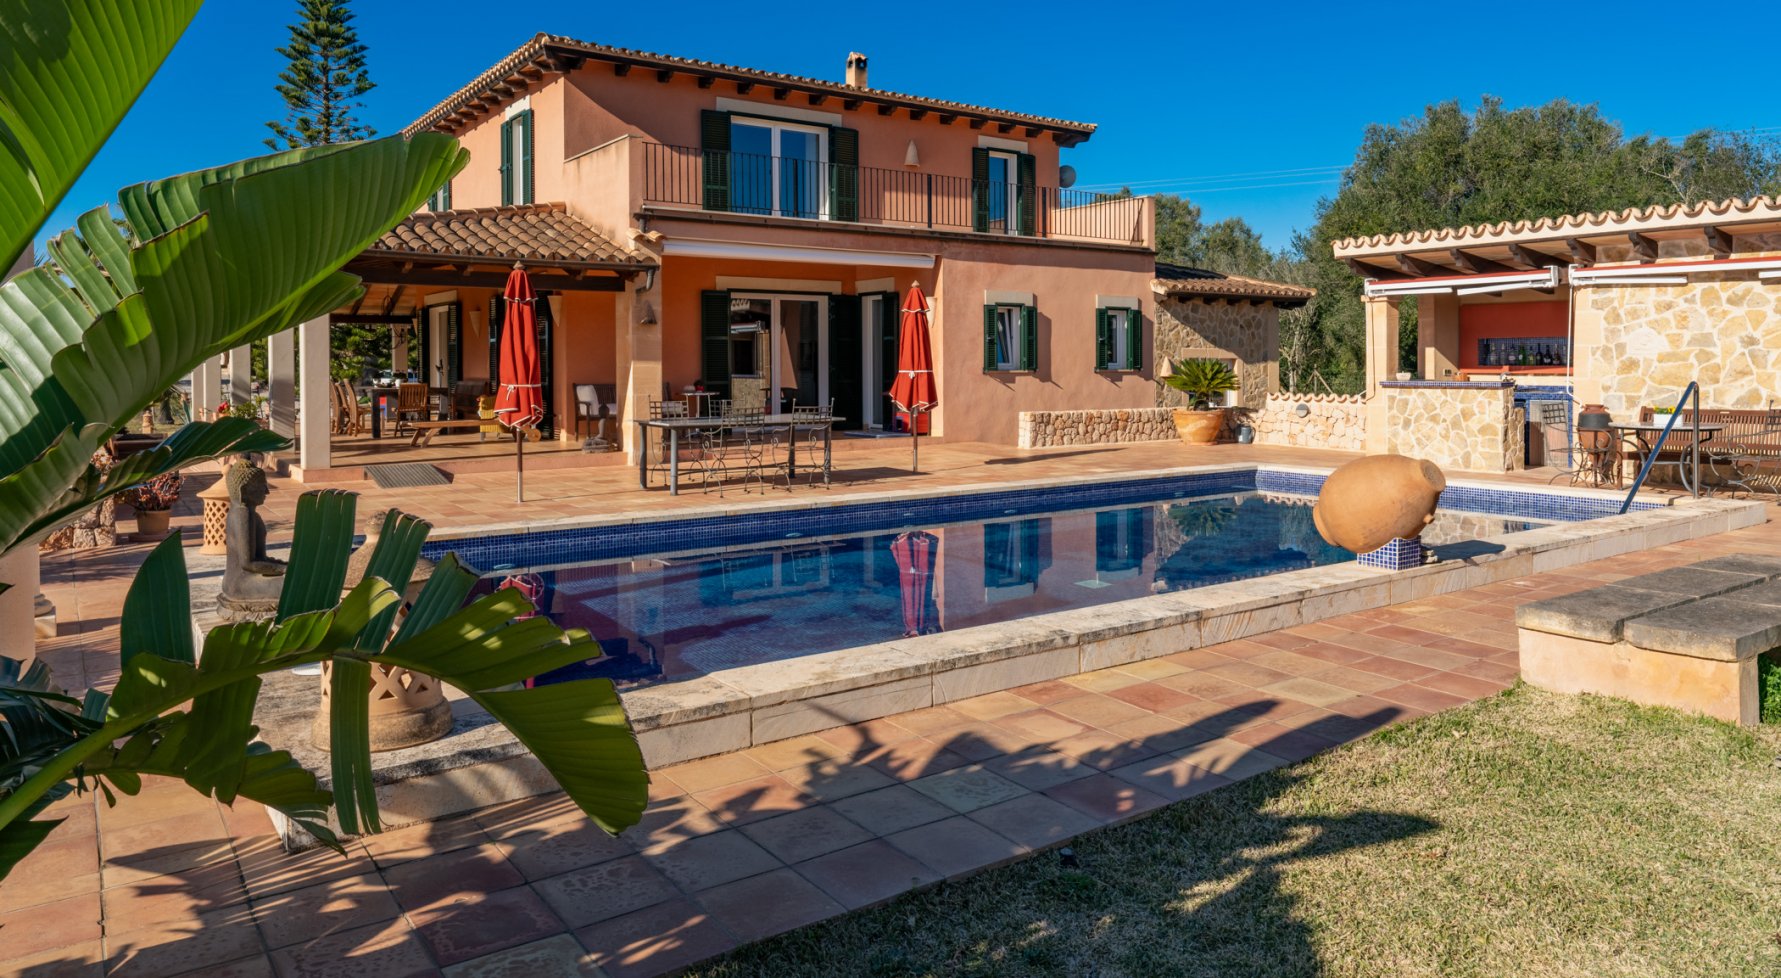 Immobilie in 07620 Mallorca - Llucmajor: Autarkes Landhaus mit großem Pool nahe Llucmajor - bild 1